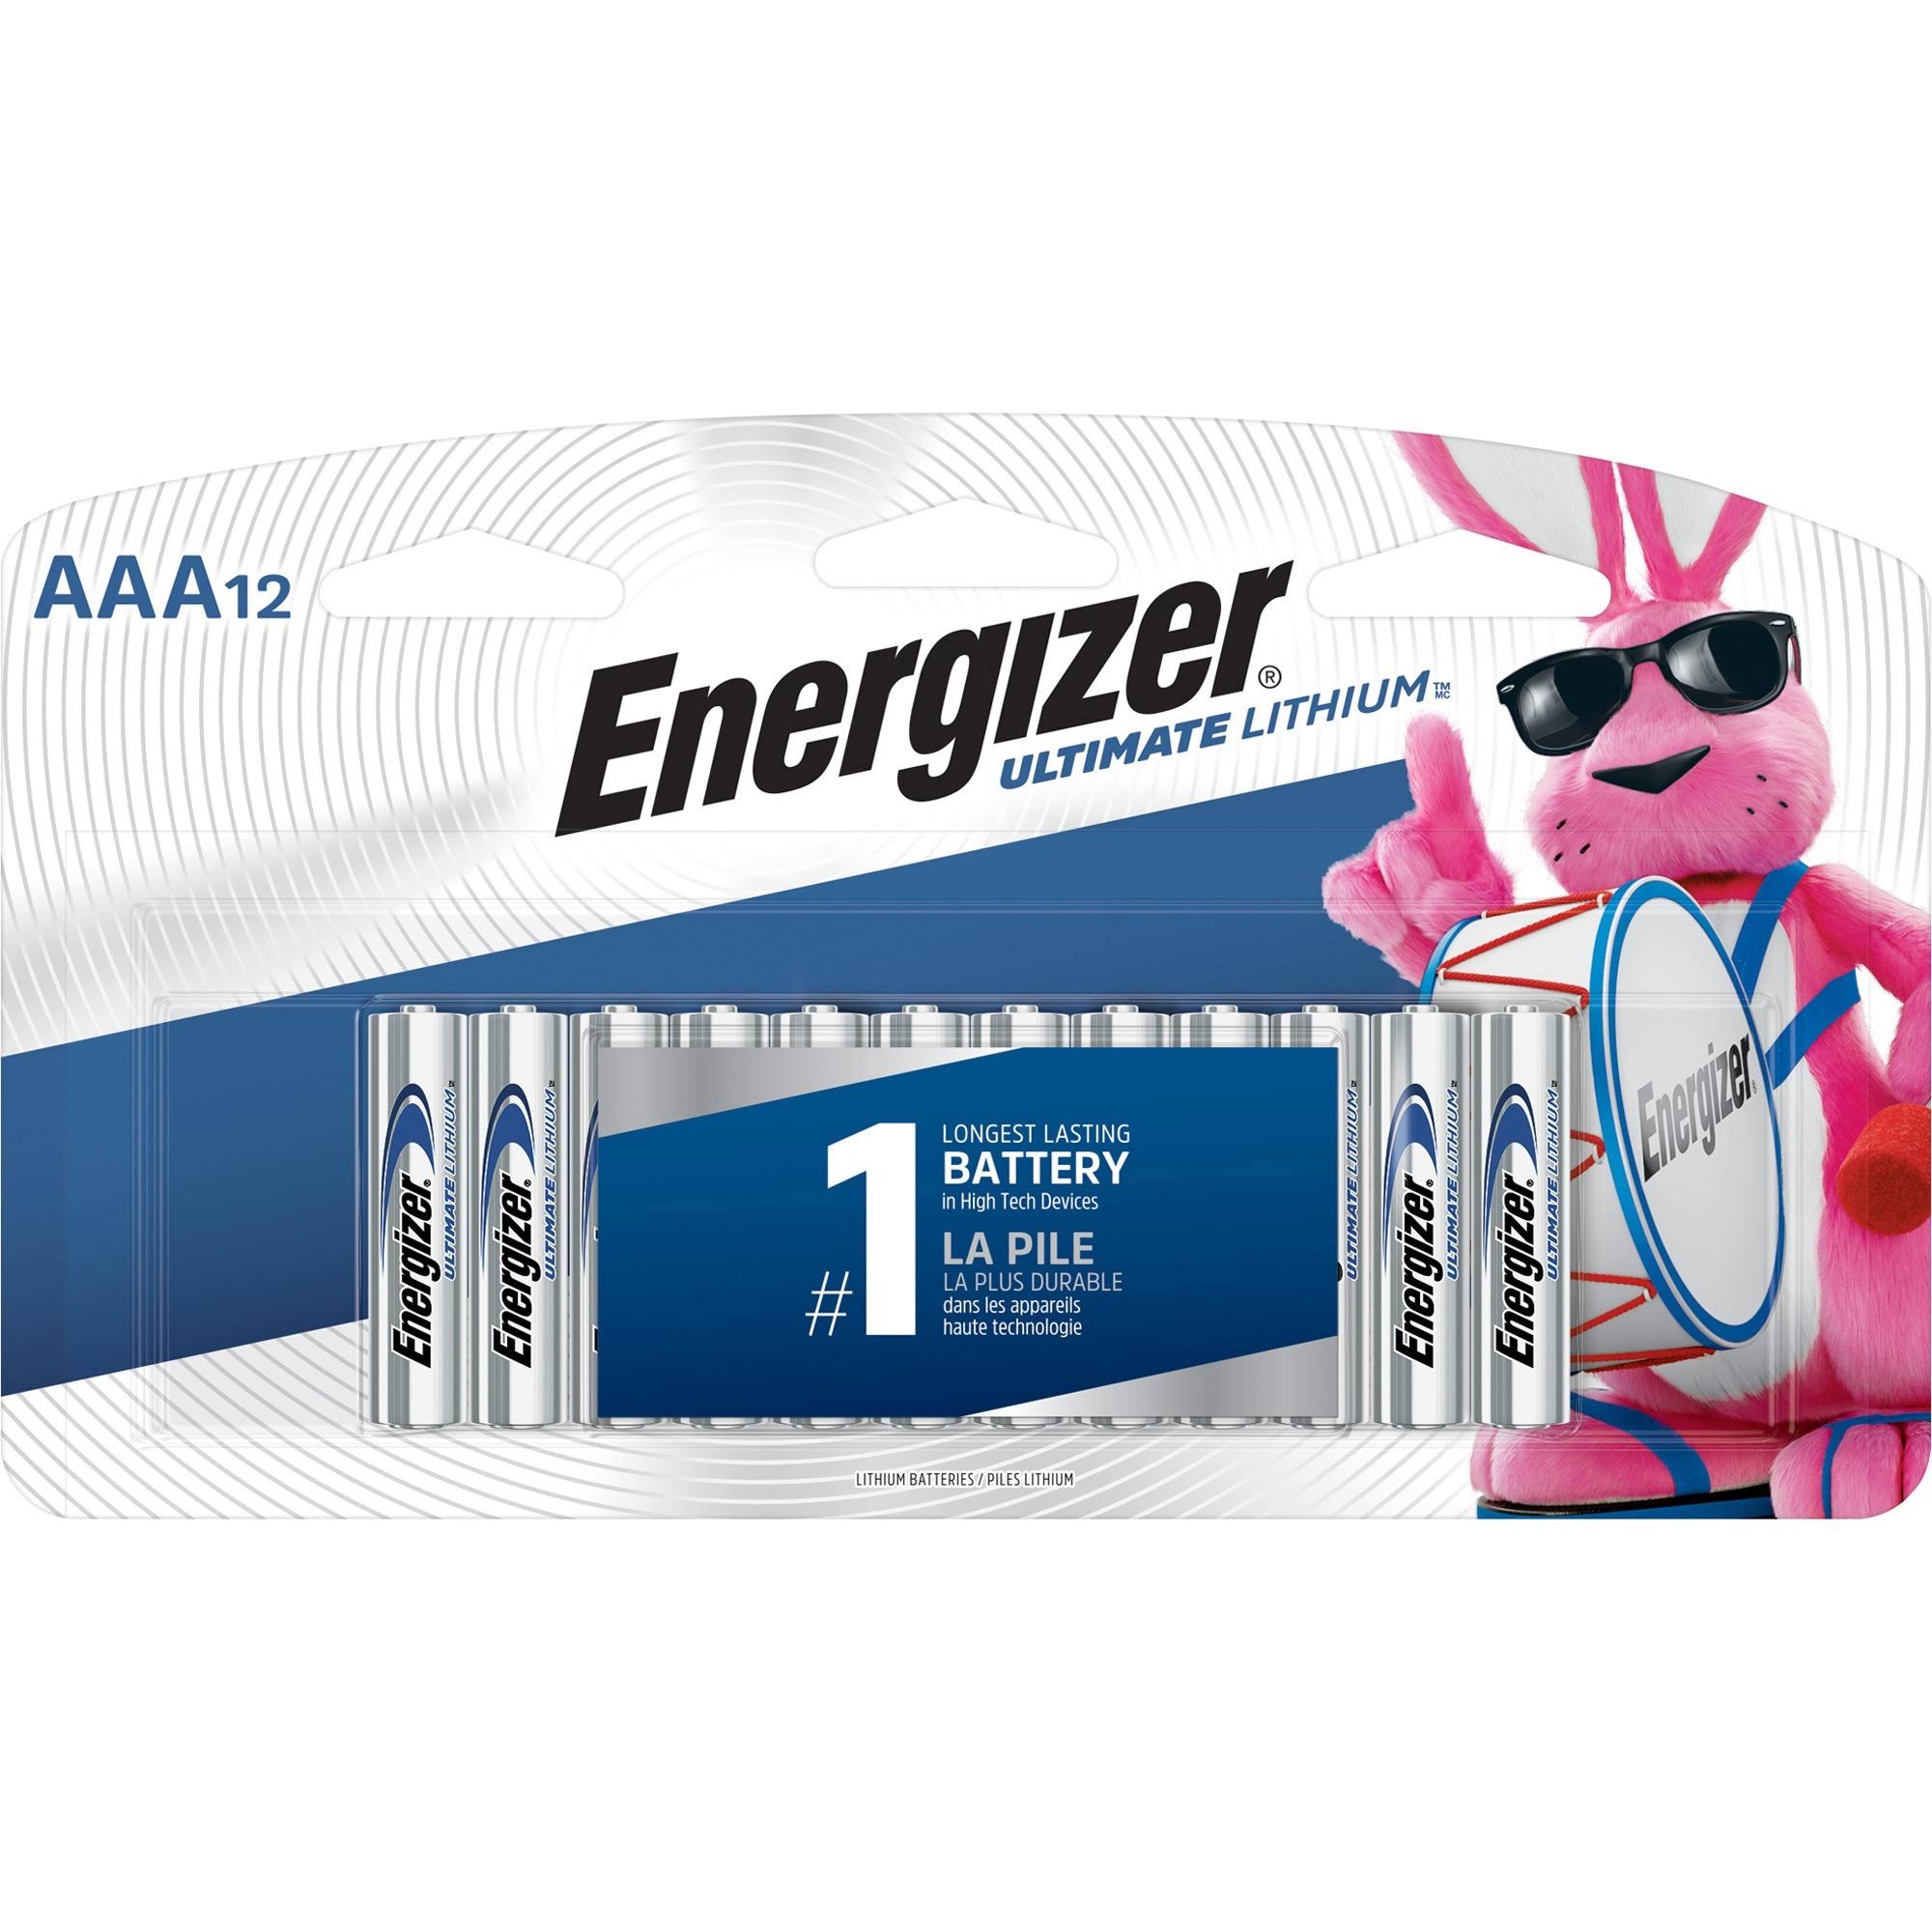 Energizer L92sbp-12 Ultimate Lithium AAA Batteries Battery - 12pk